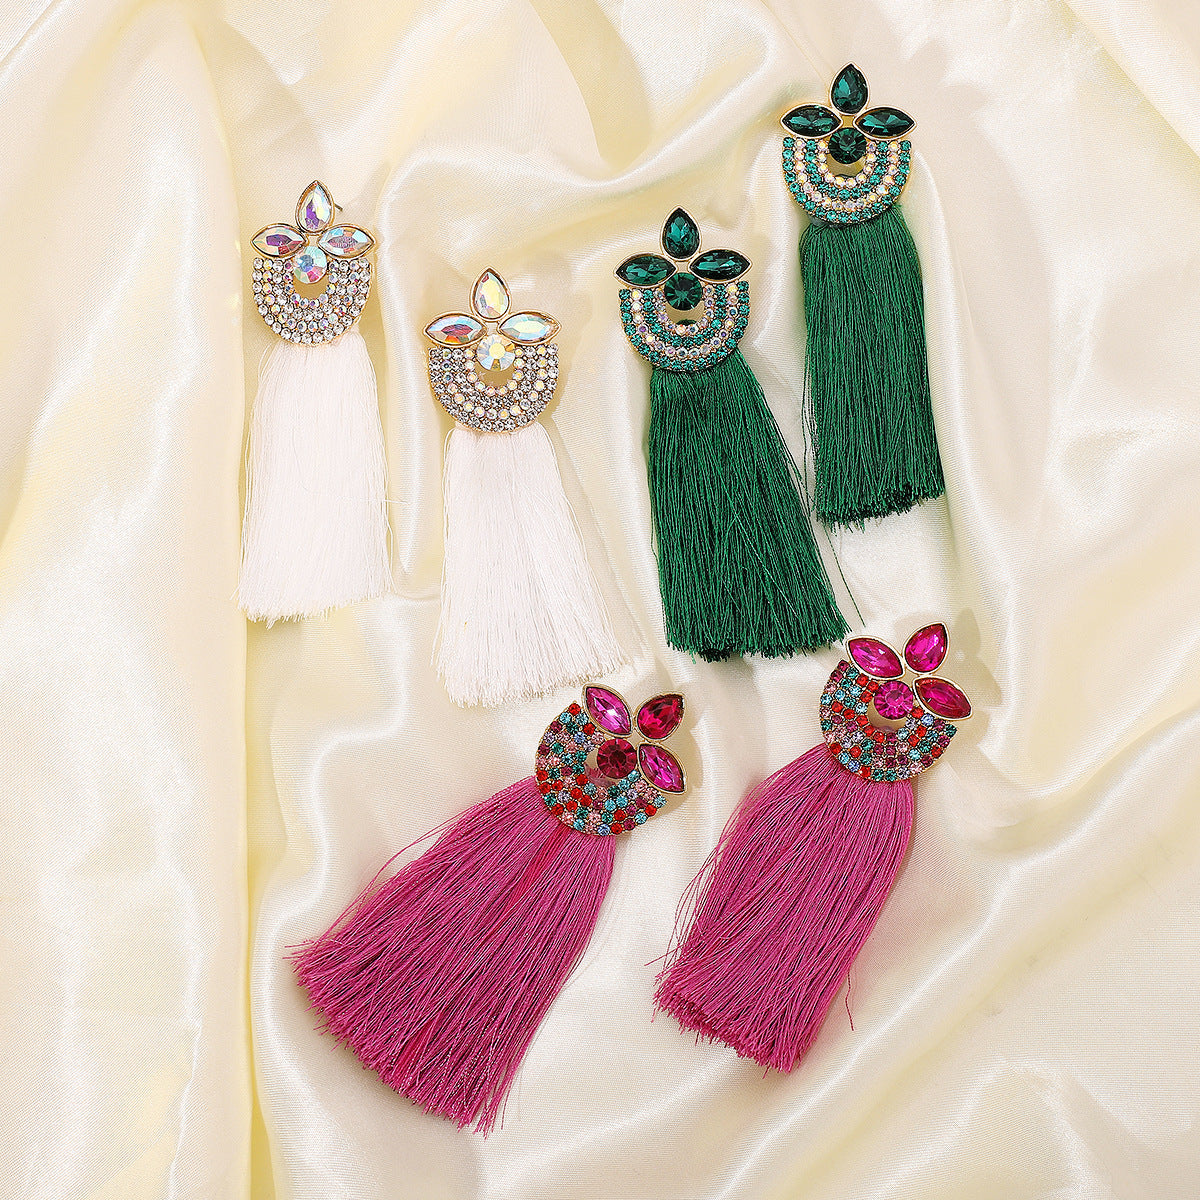 Ethnic colorful tassel earrings